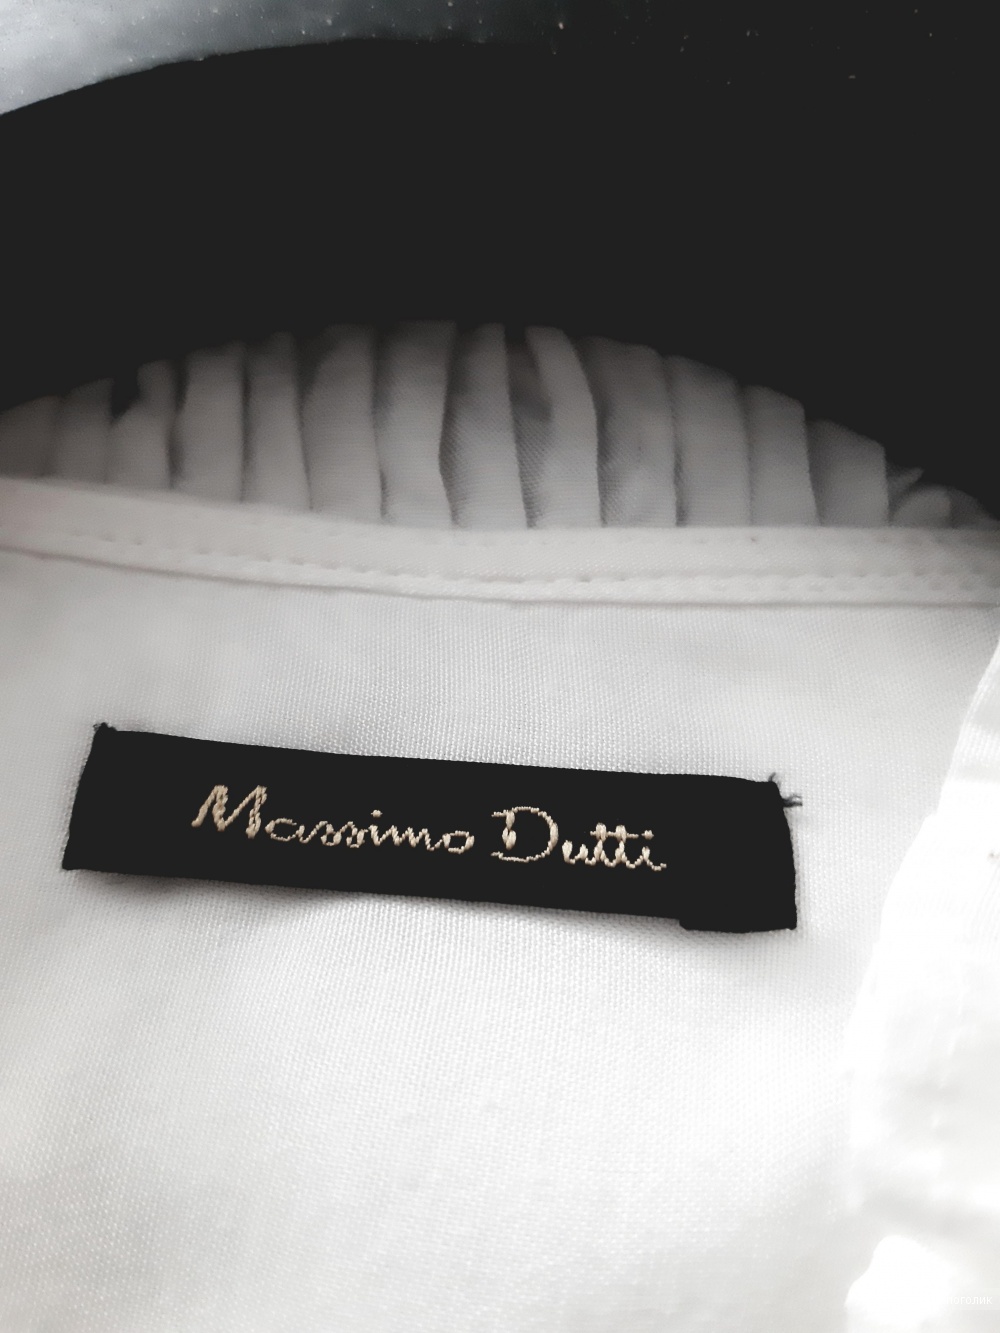 Блузка  Massimo Dutti, размер 38